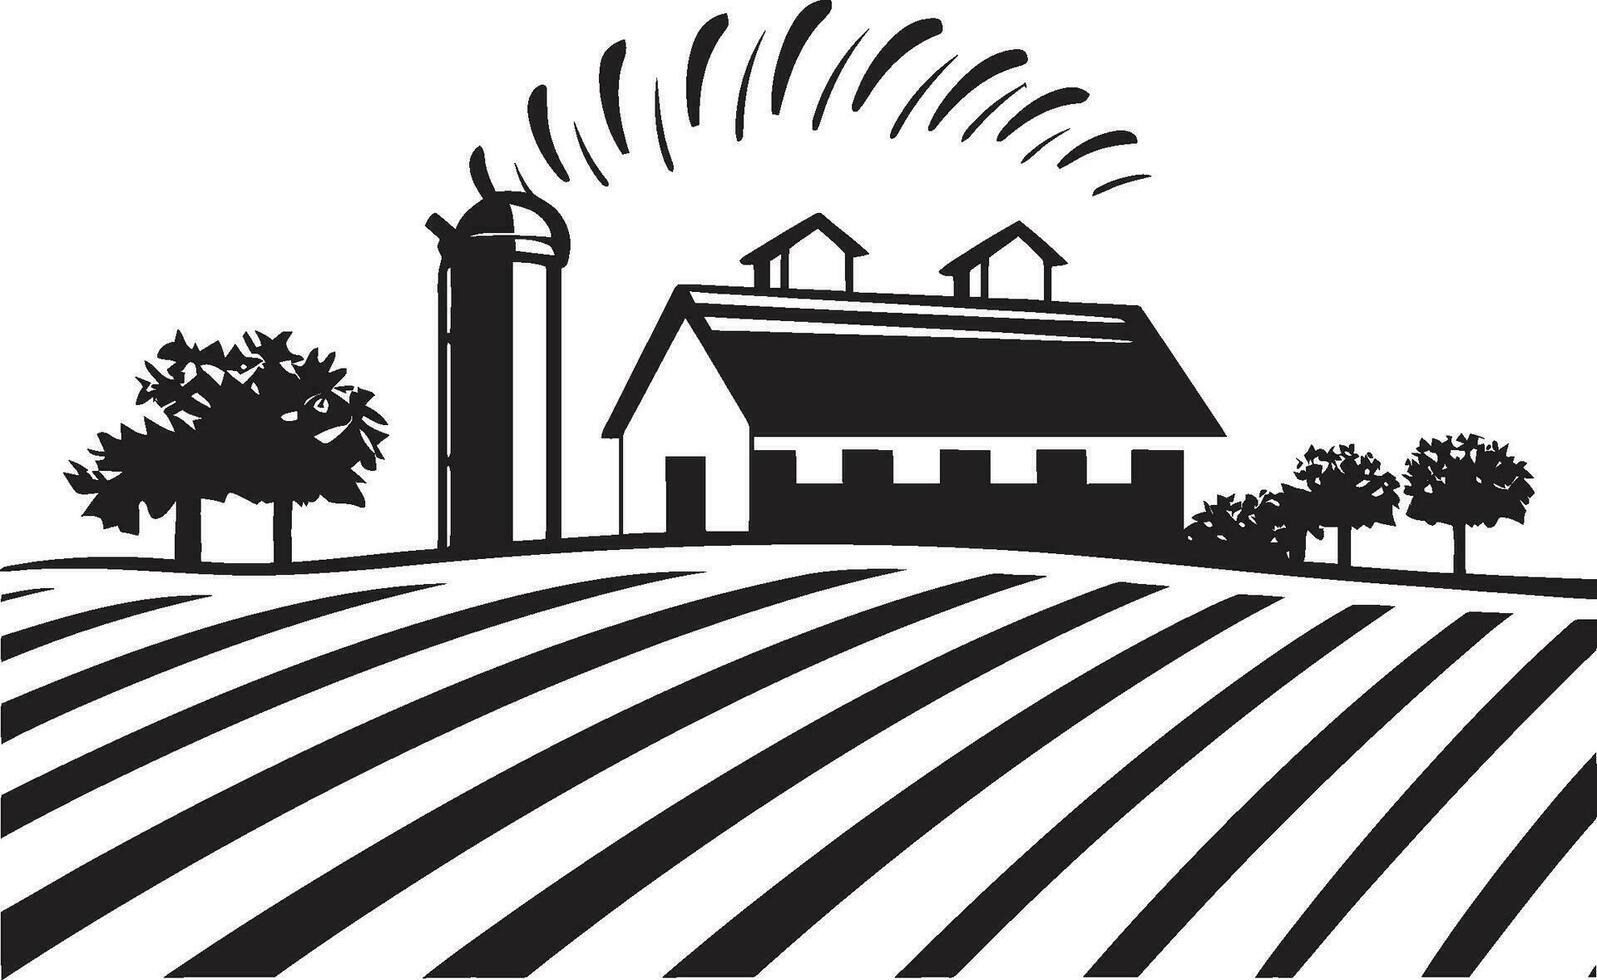 Fields  Oasis Vector Farmhouse Emblem Rural Essence Black Logo for Farming